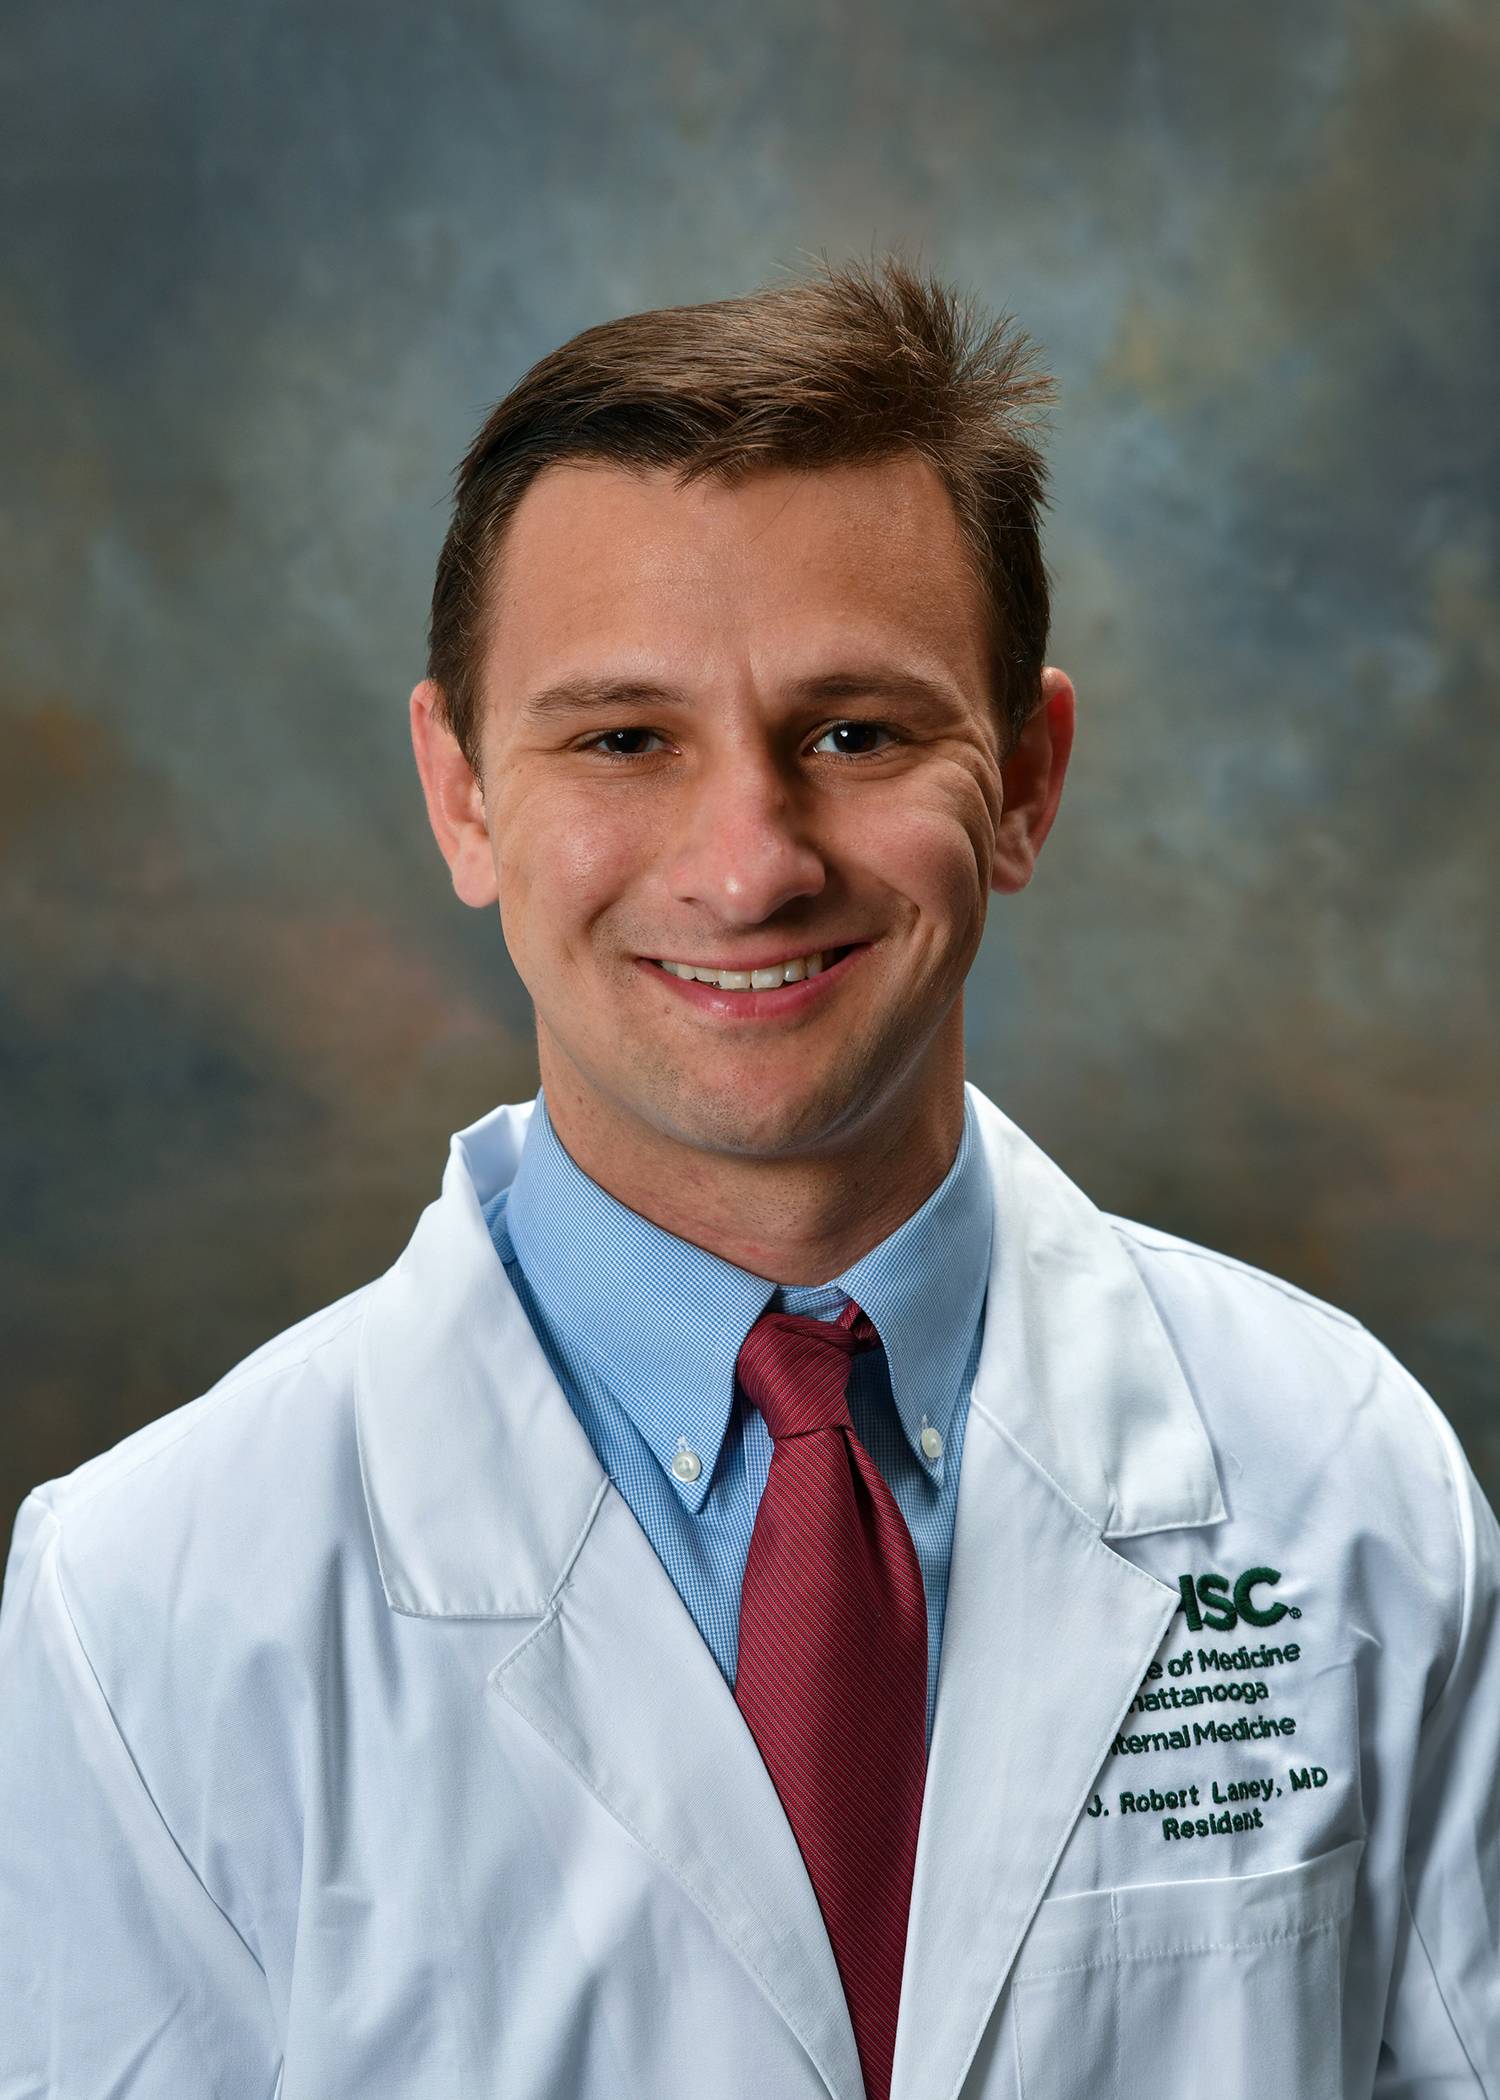 Dr. Robert Laney